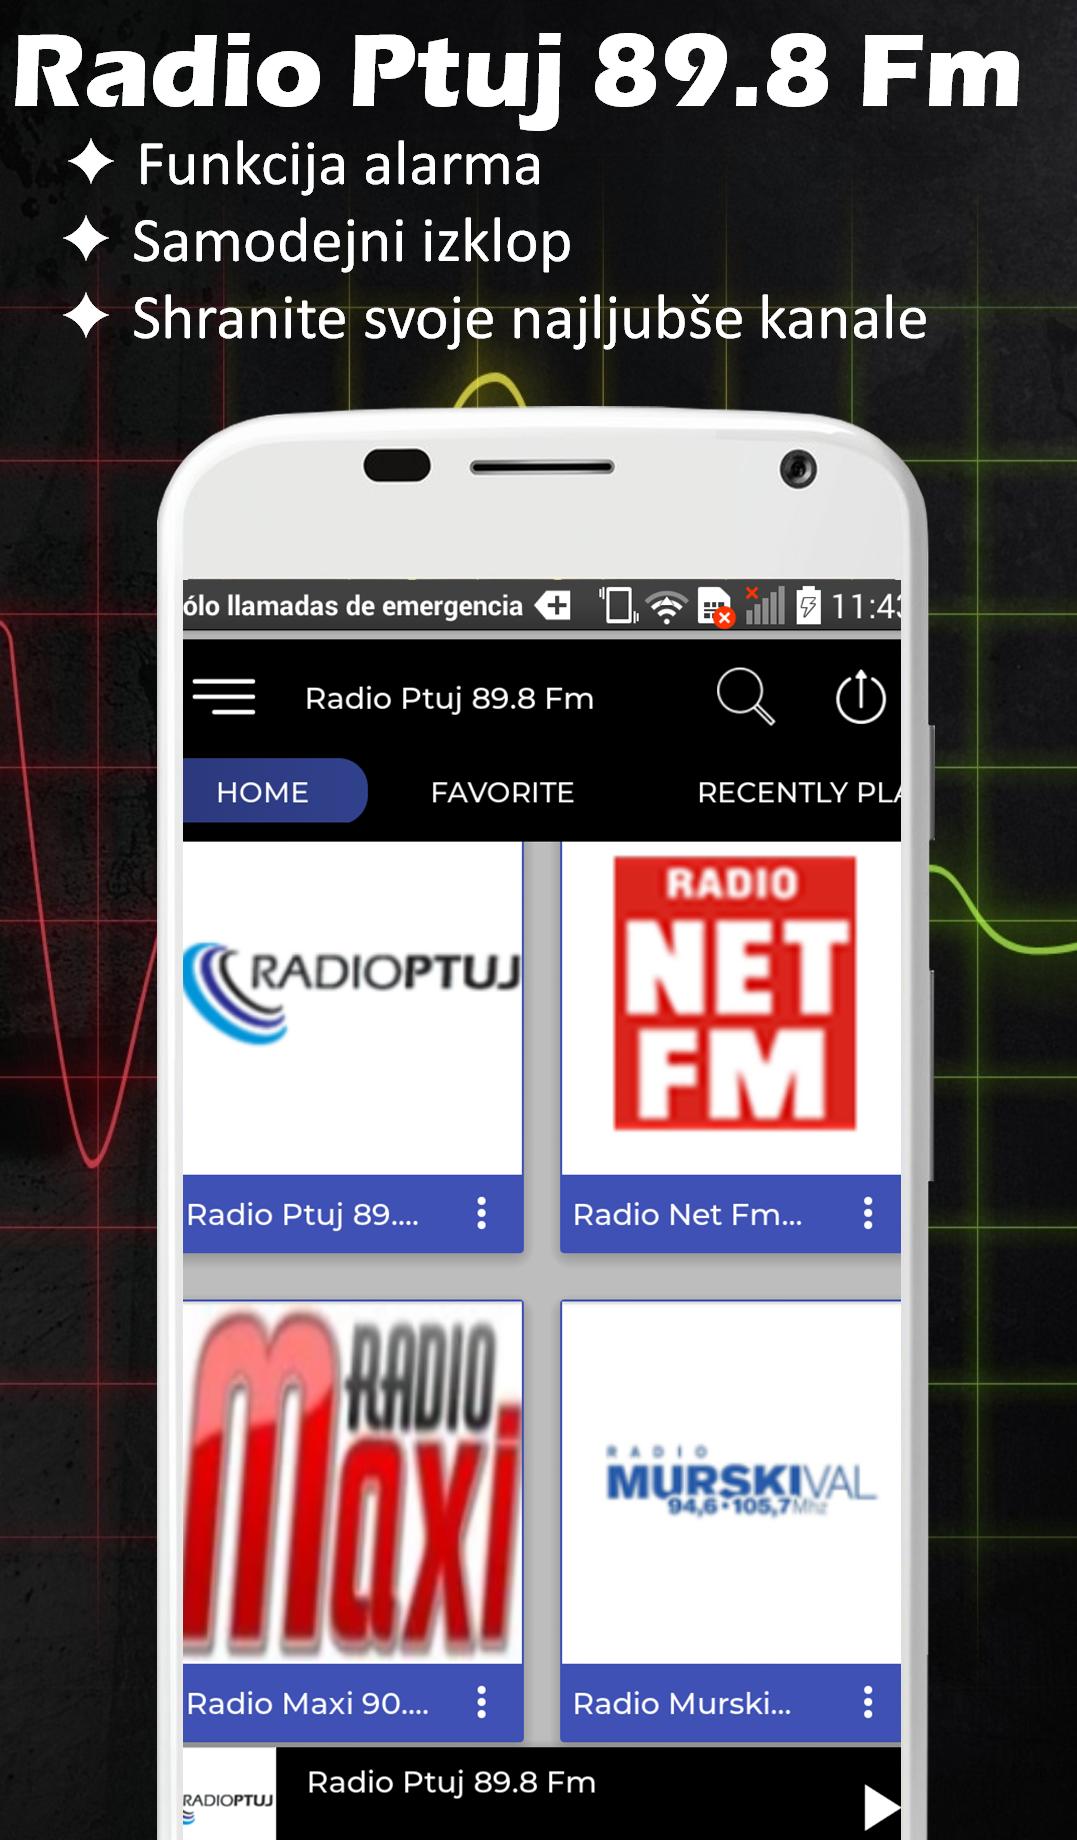 Radio Ptuj 89.8 Fm for Android - APK Download